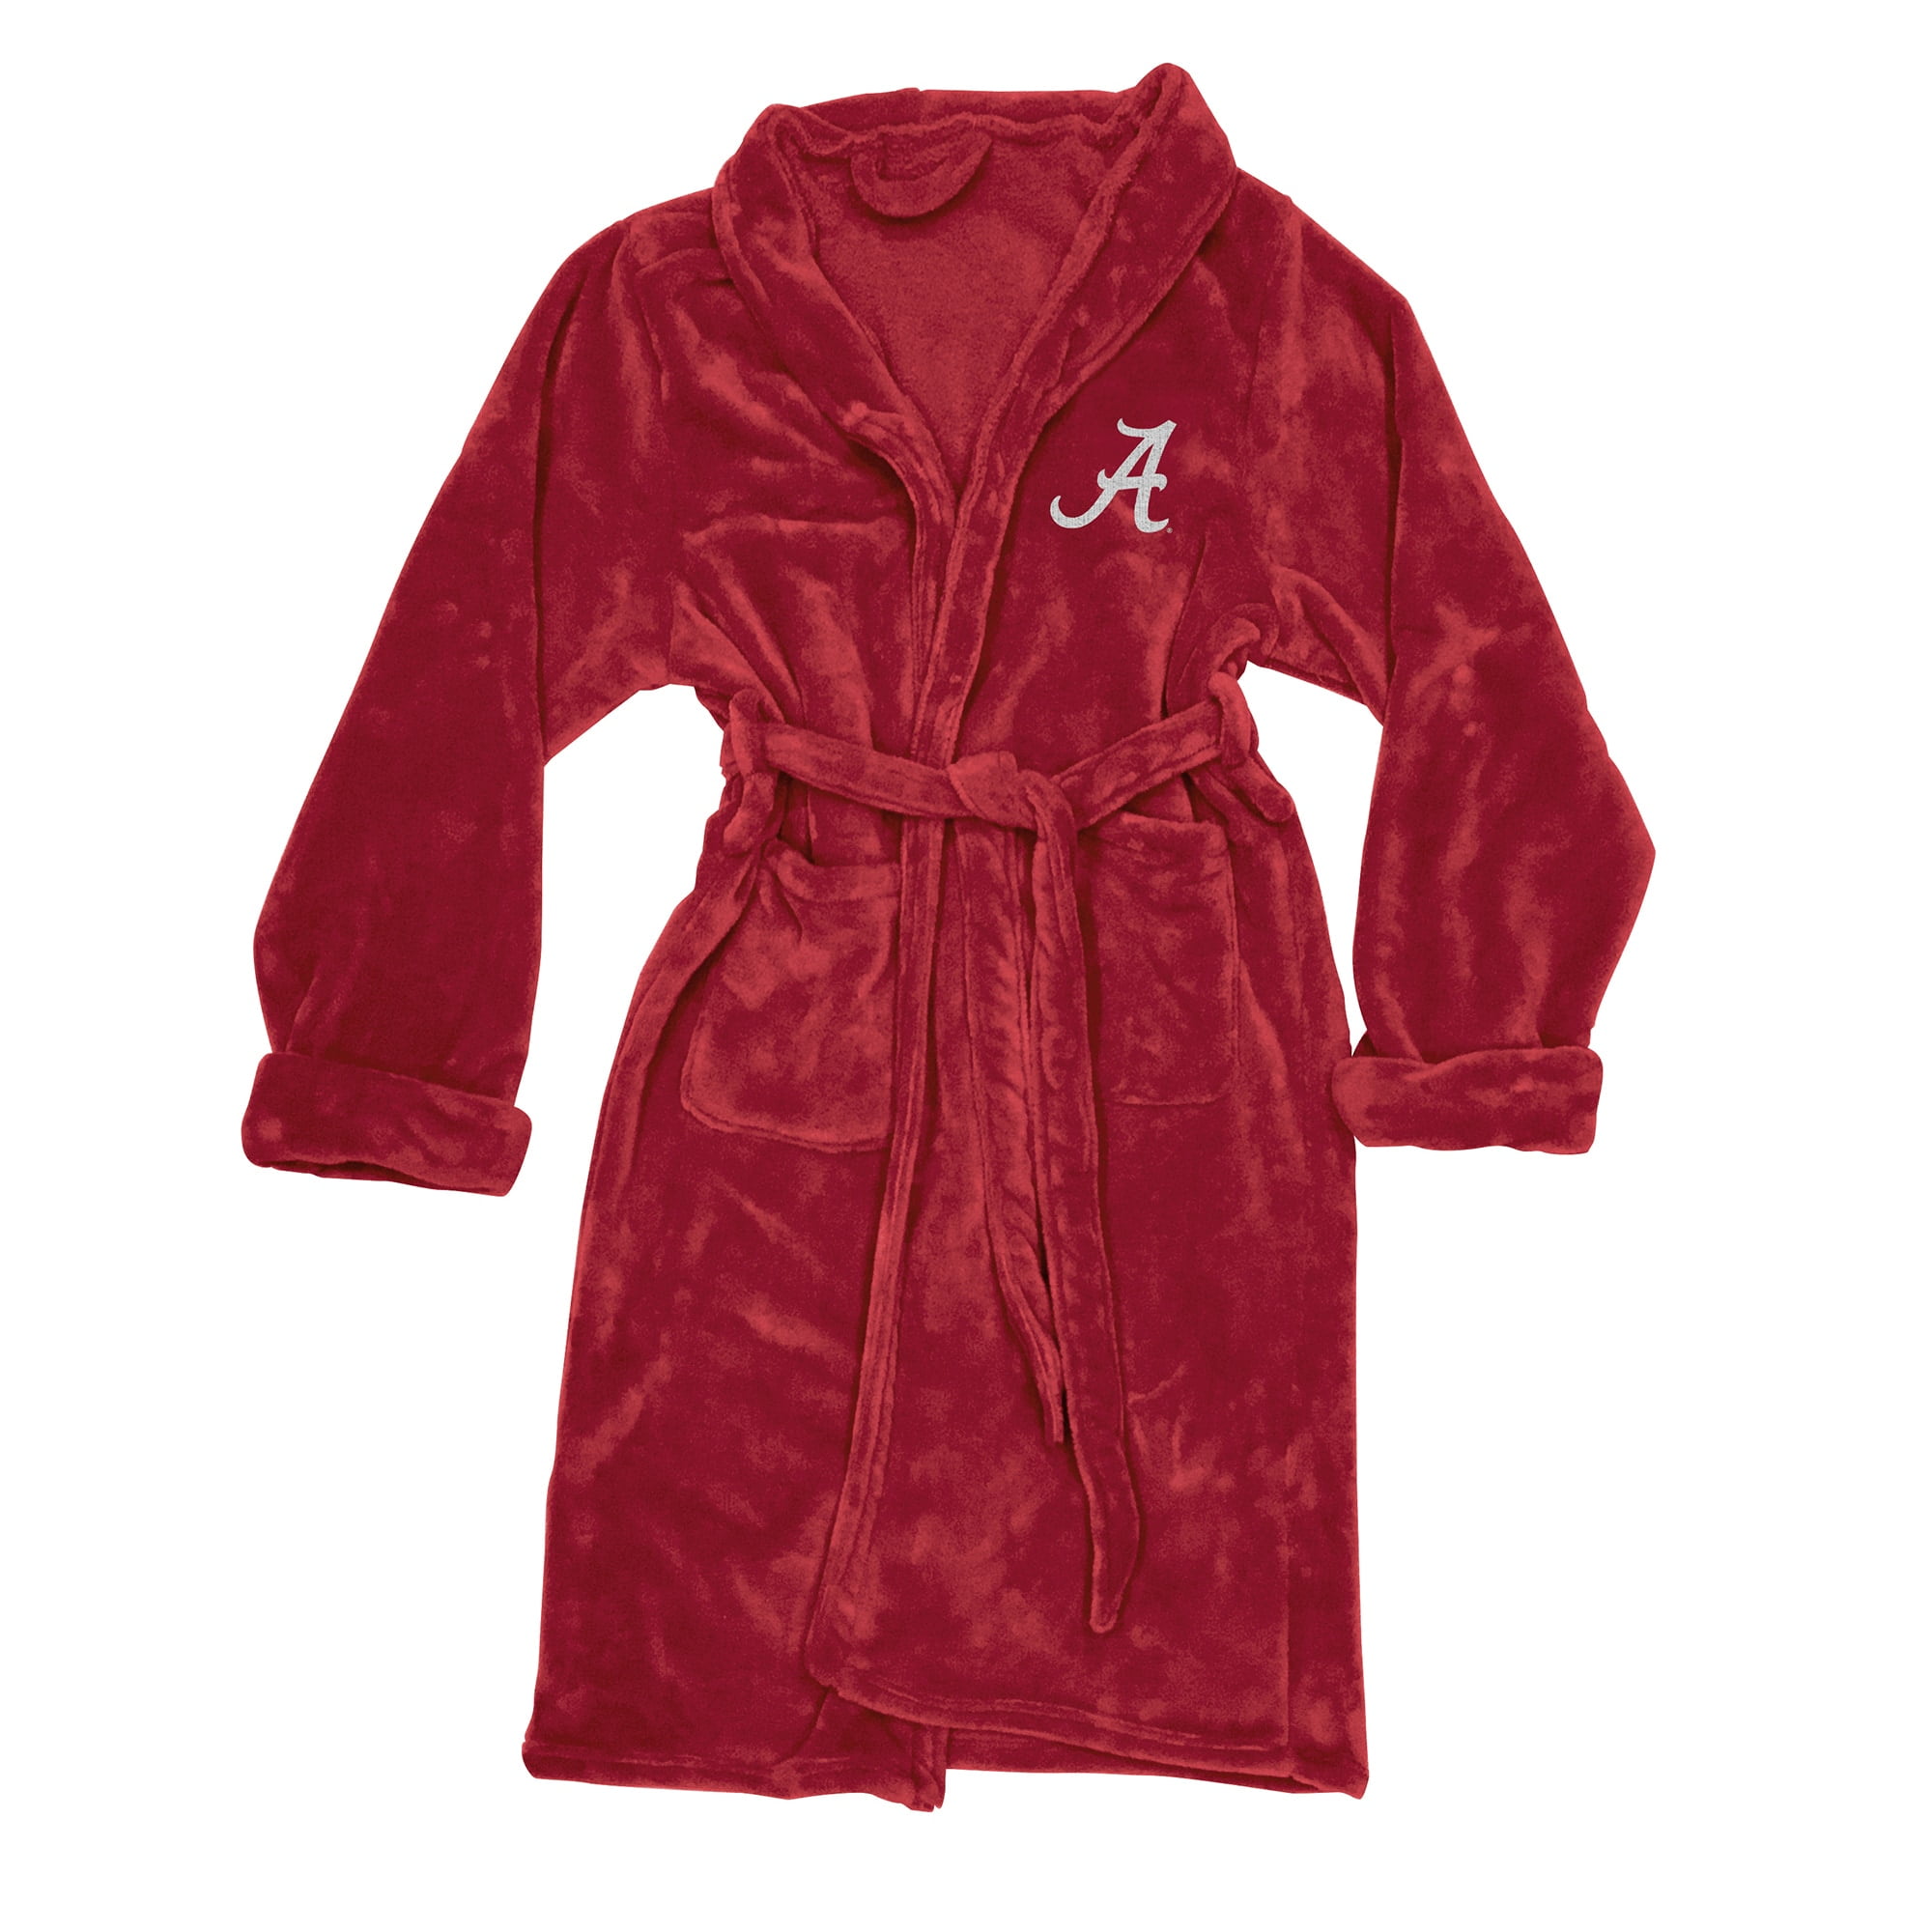 Alabama Crimson Tide Terrycloth Kimono Robe Size S M Red NEW #8269 